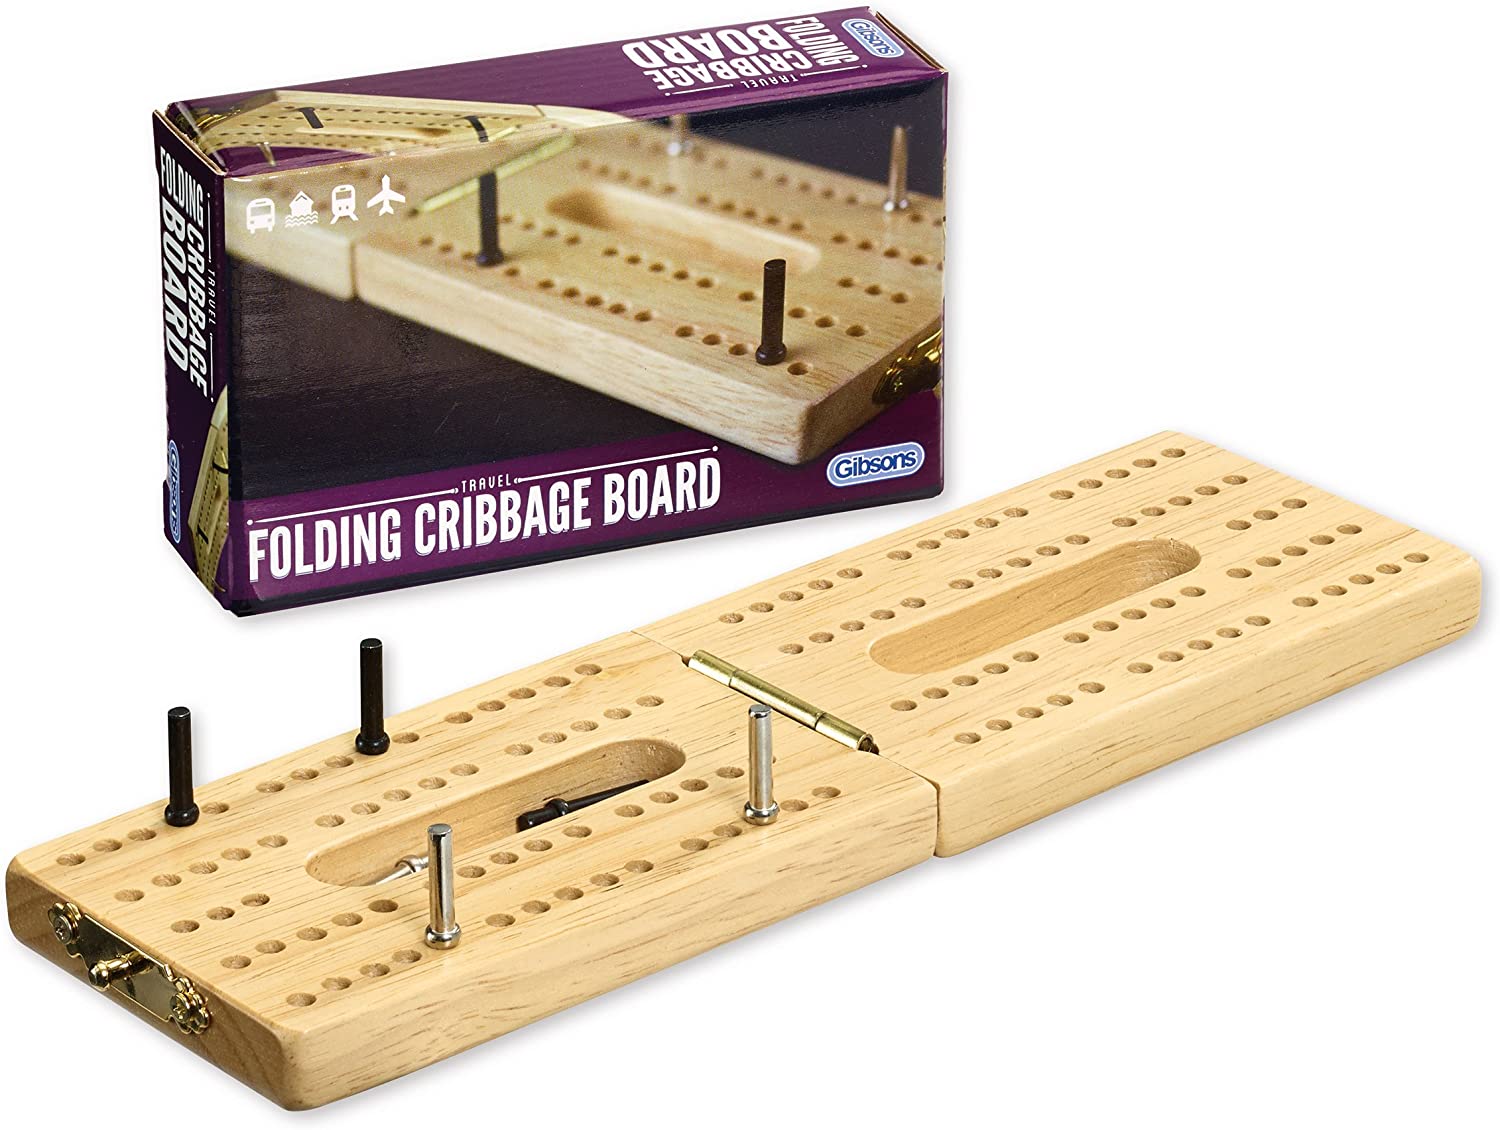 Folding Cribbage Board